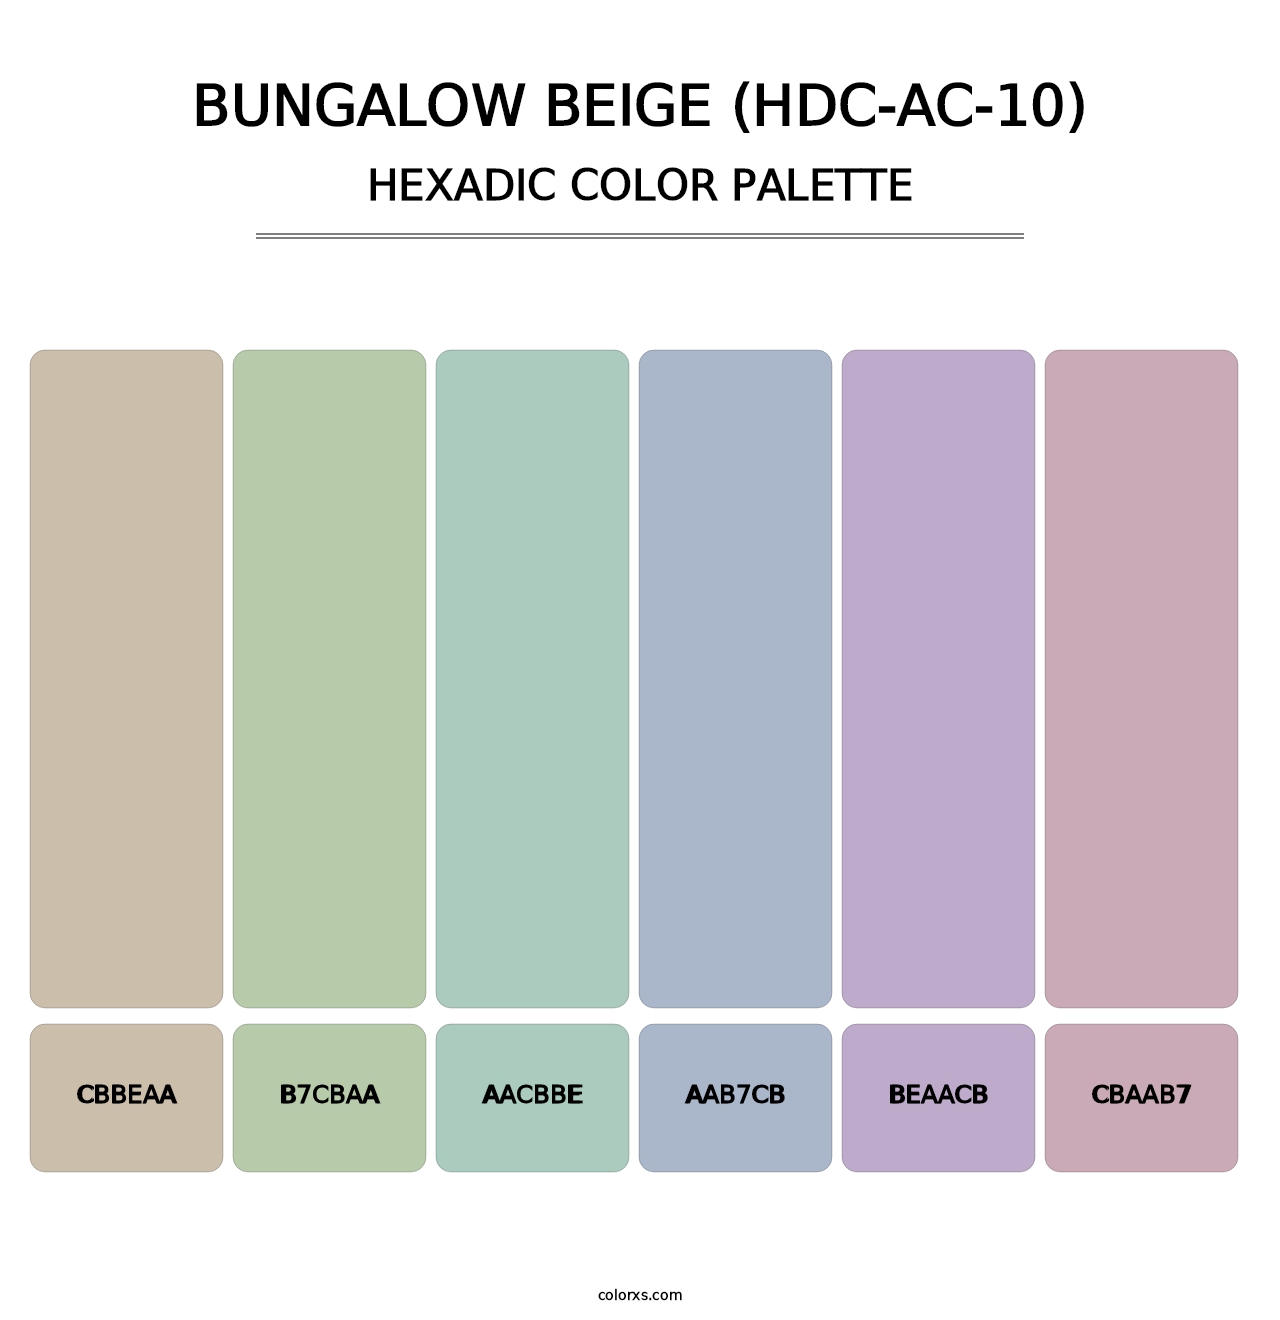 Bungalow Beige (HDC-AC-10) - Hexadic Color Palette